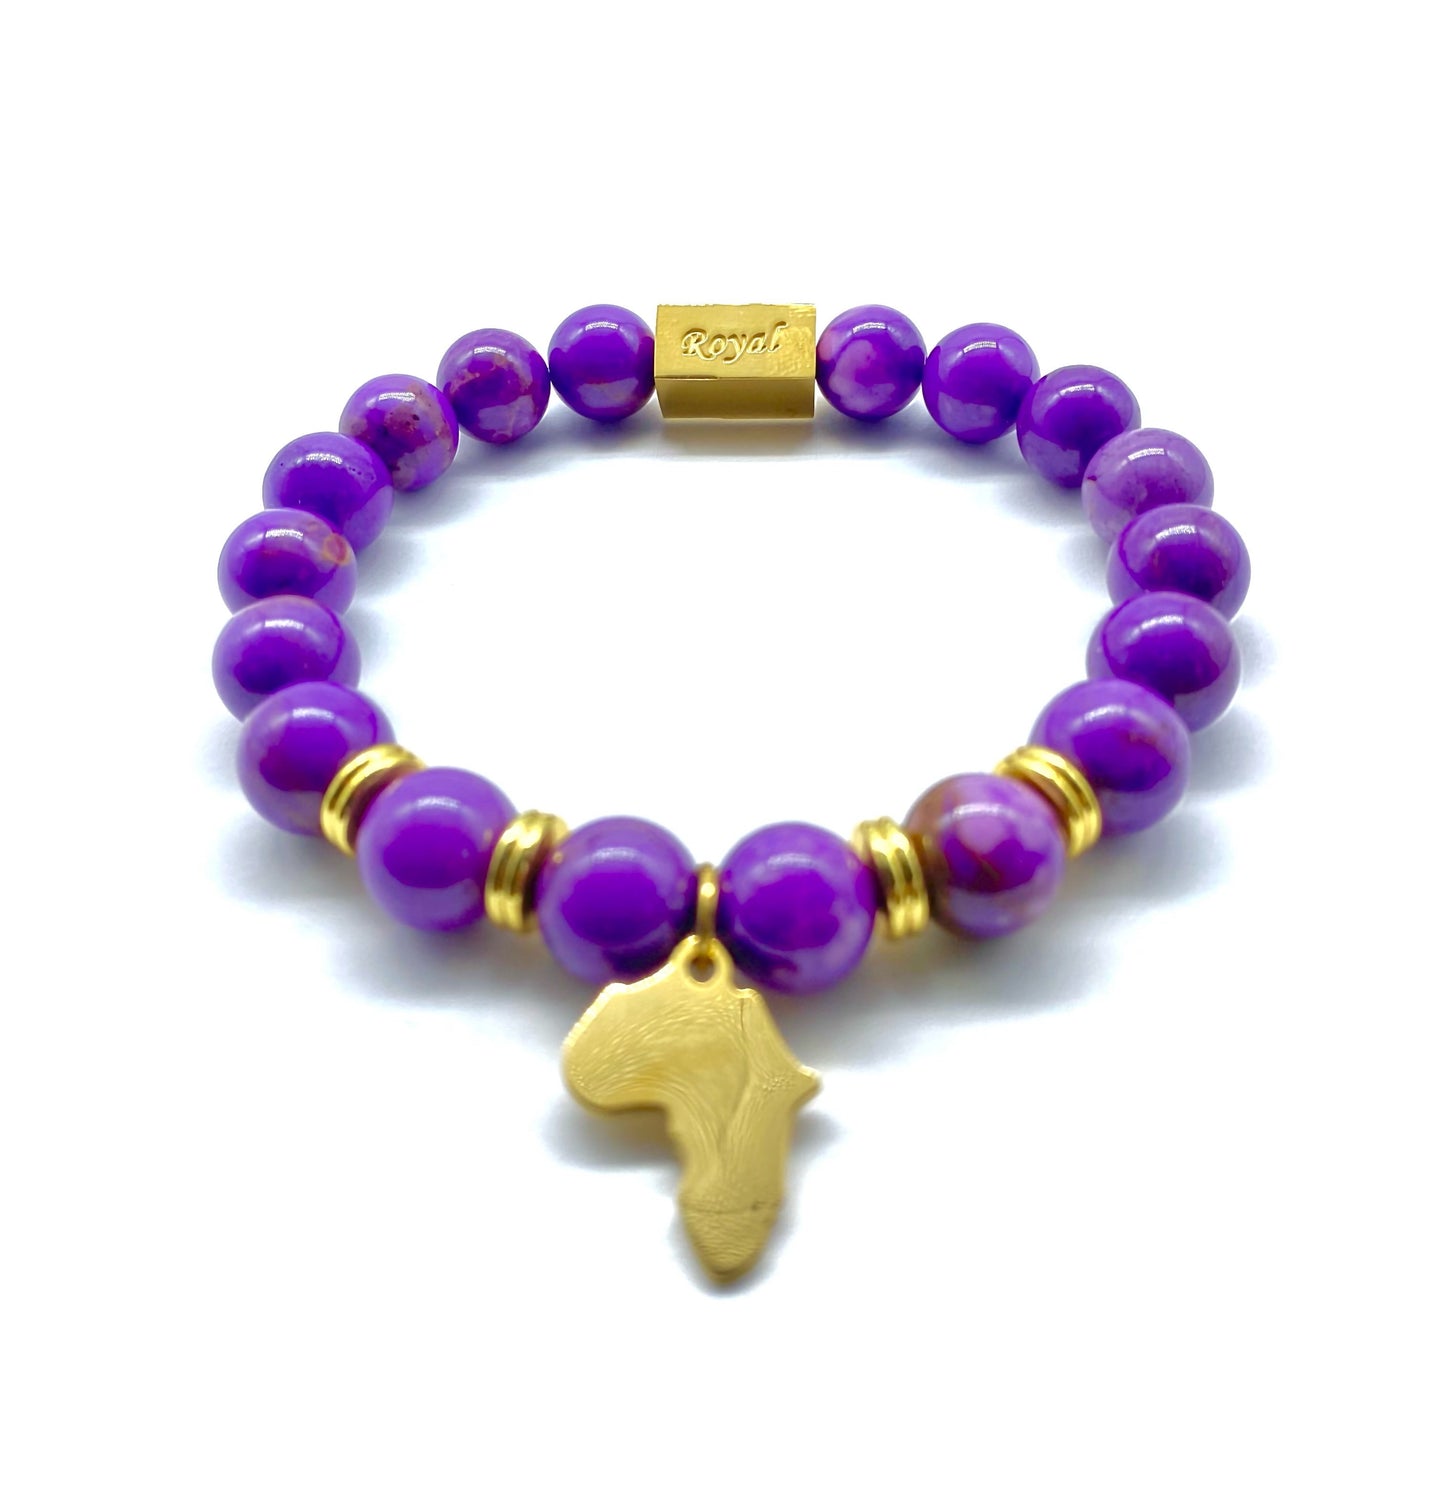 New Color Arrivals "One Africa" Bracelets